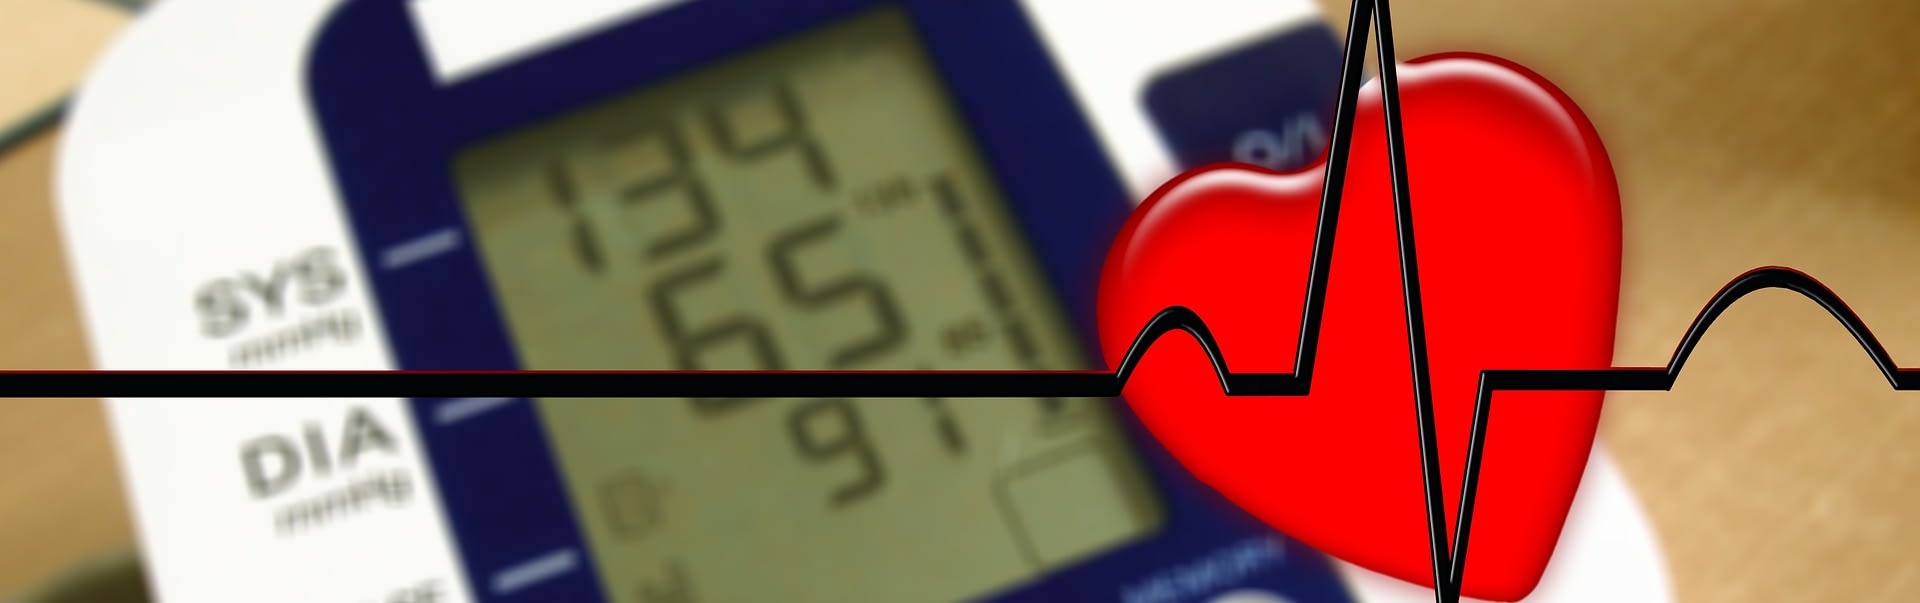 do statins help control blood pressure